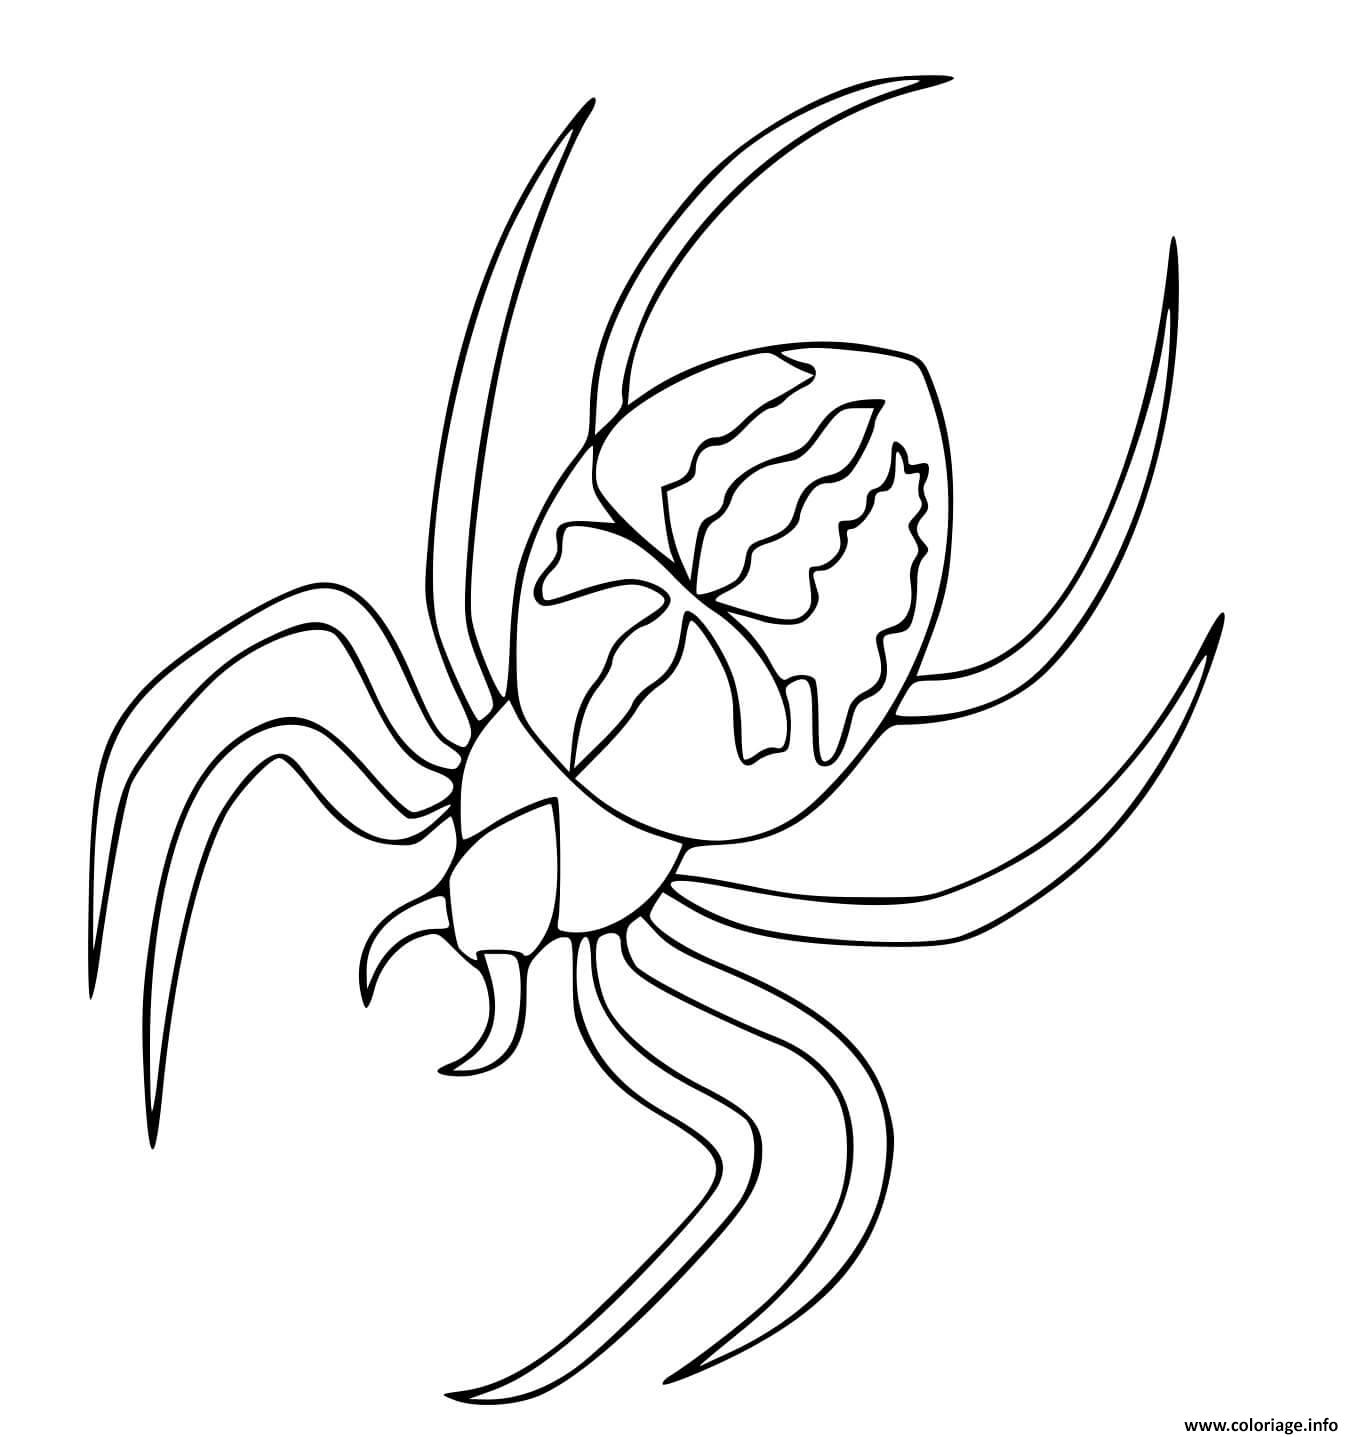 Dessin araignee spiderman Coloriage Gratuit à Imprimer